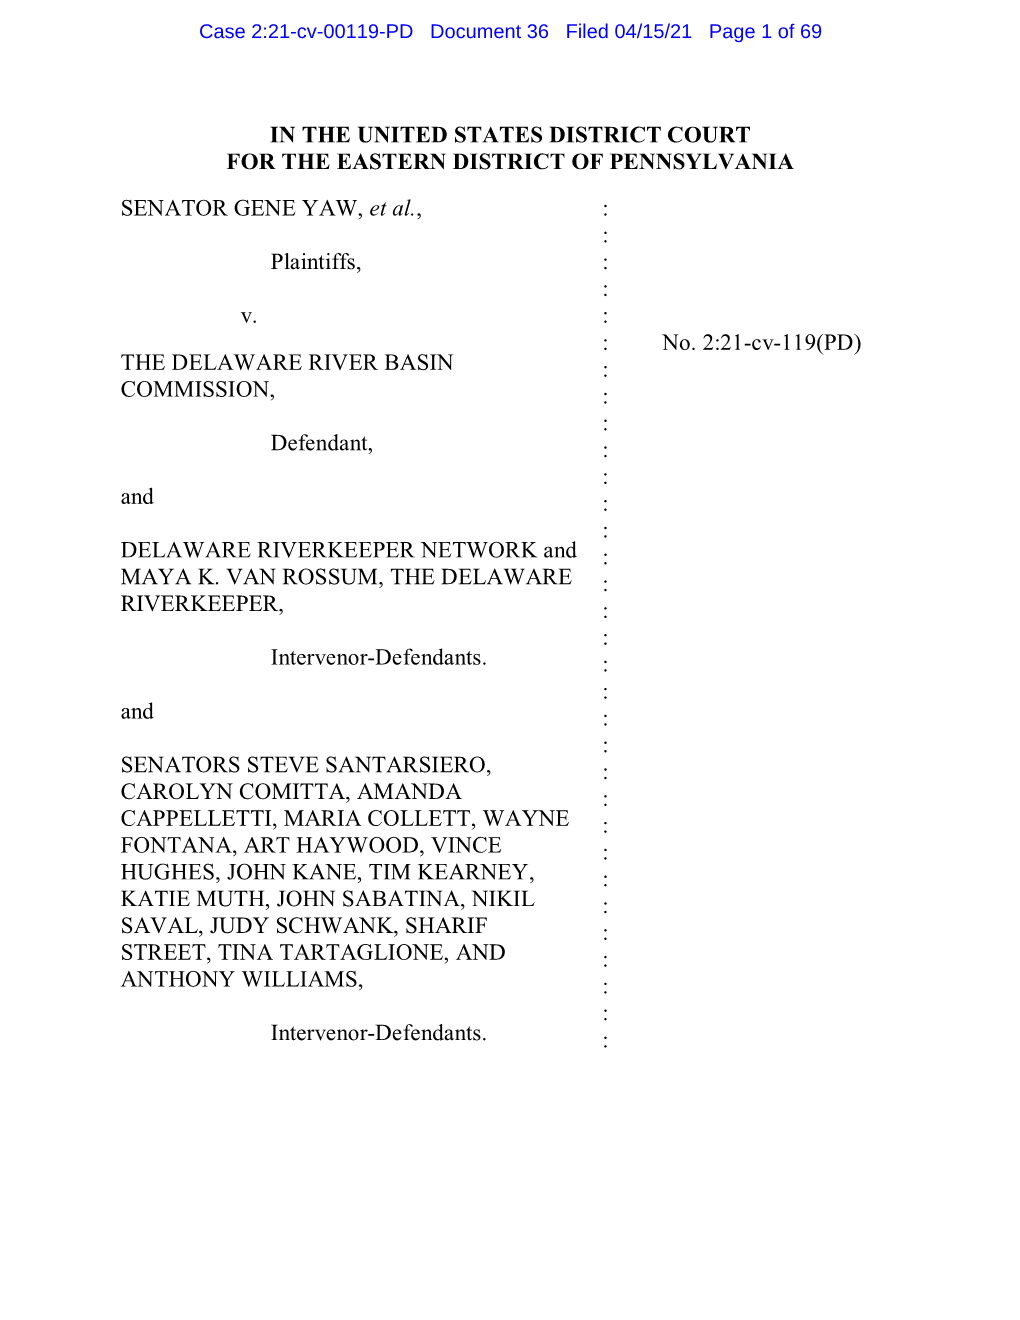 UNITED STATES DISTRICT COURT for the EASTERN DISTRICT of PENNSYLVANIA SENATOR GENE YAW, Et Al., : : Plaintiffs, : : V